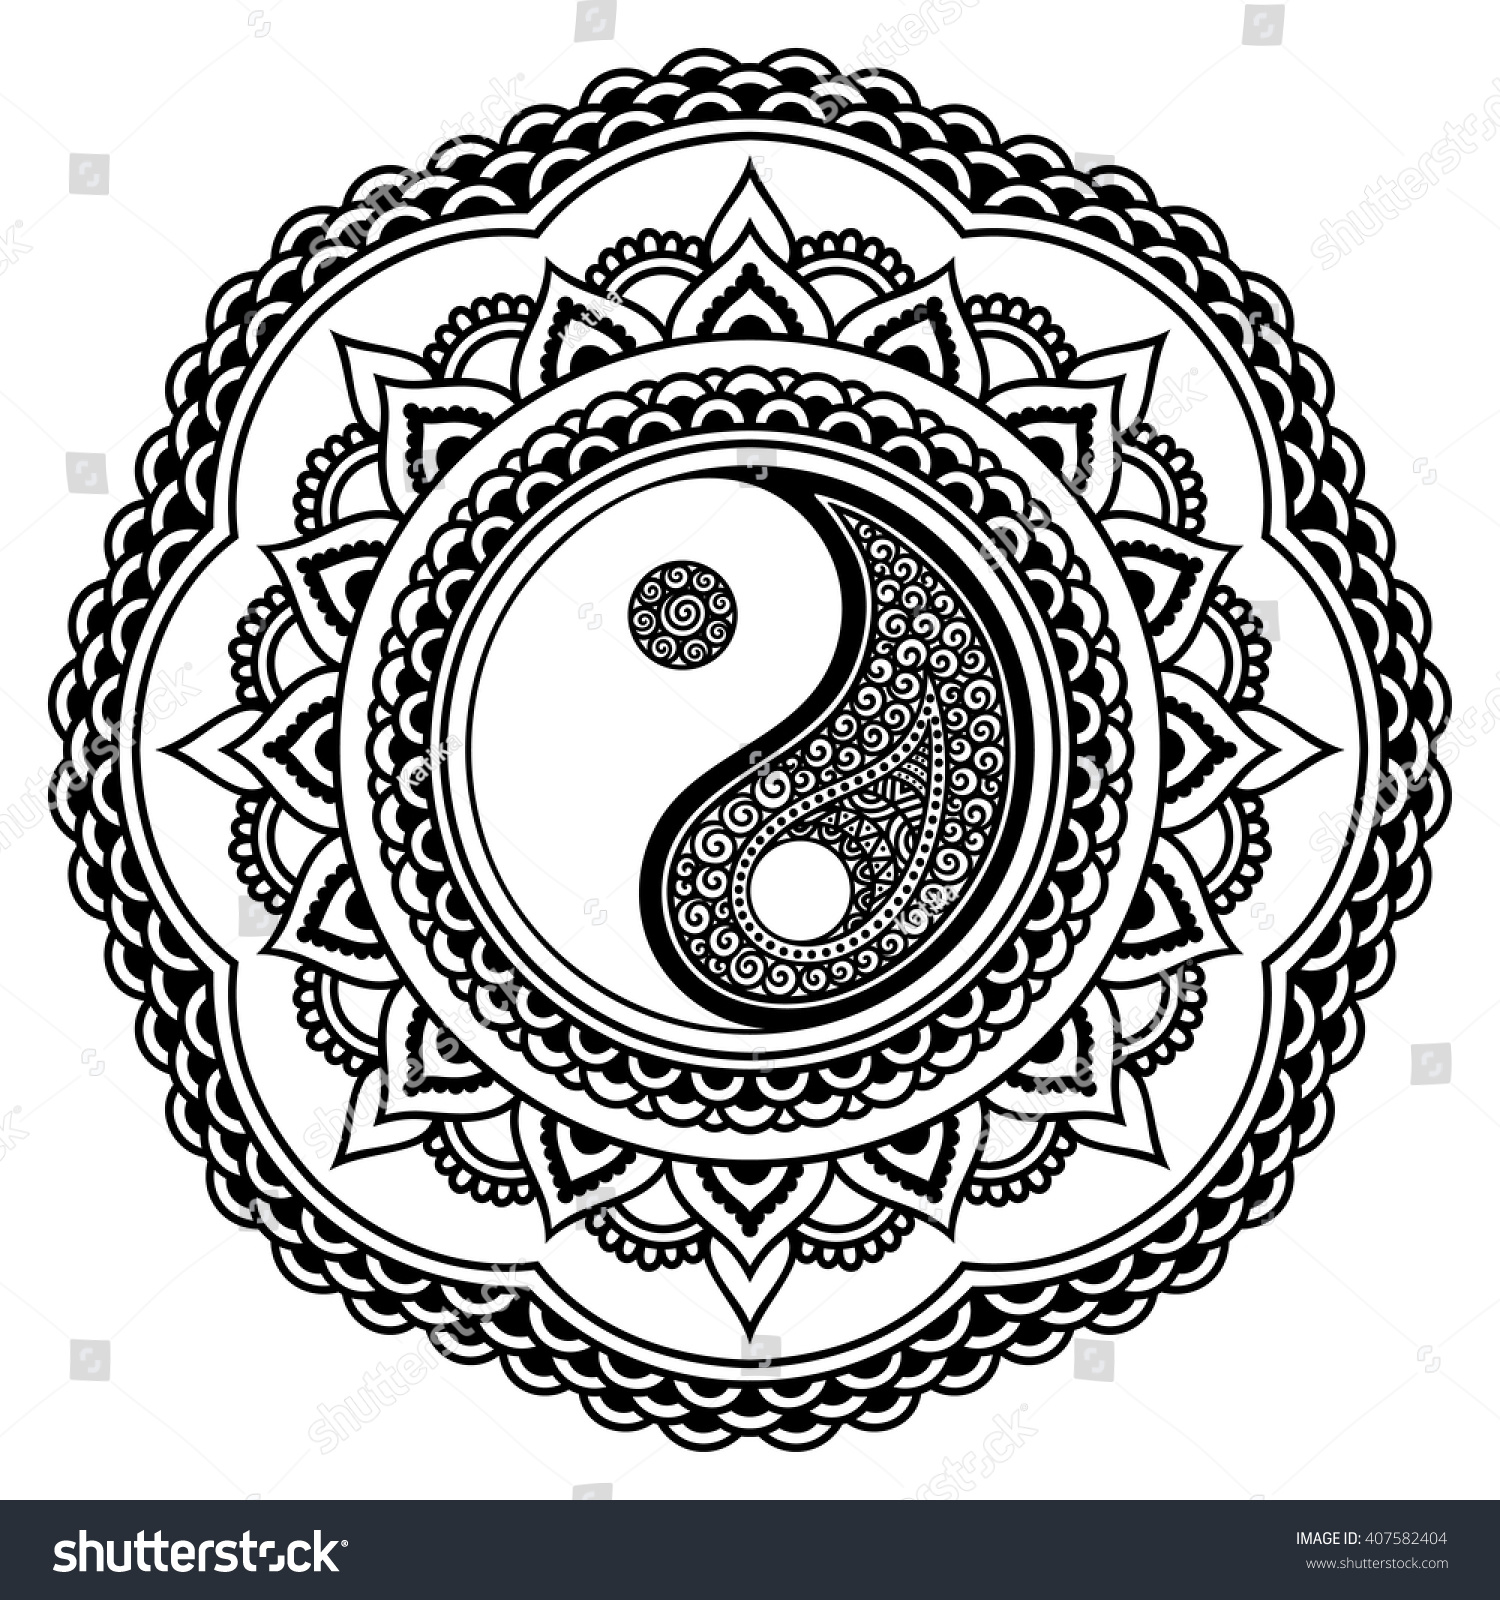 Download Vector Henna Tatoo Mandala Yinyang Decorative Stock Vector ...